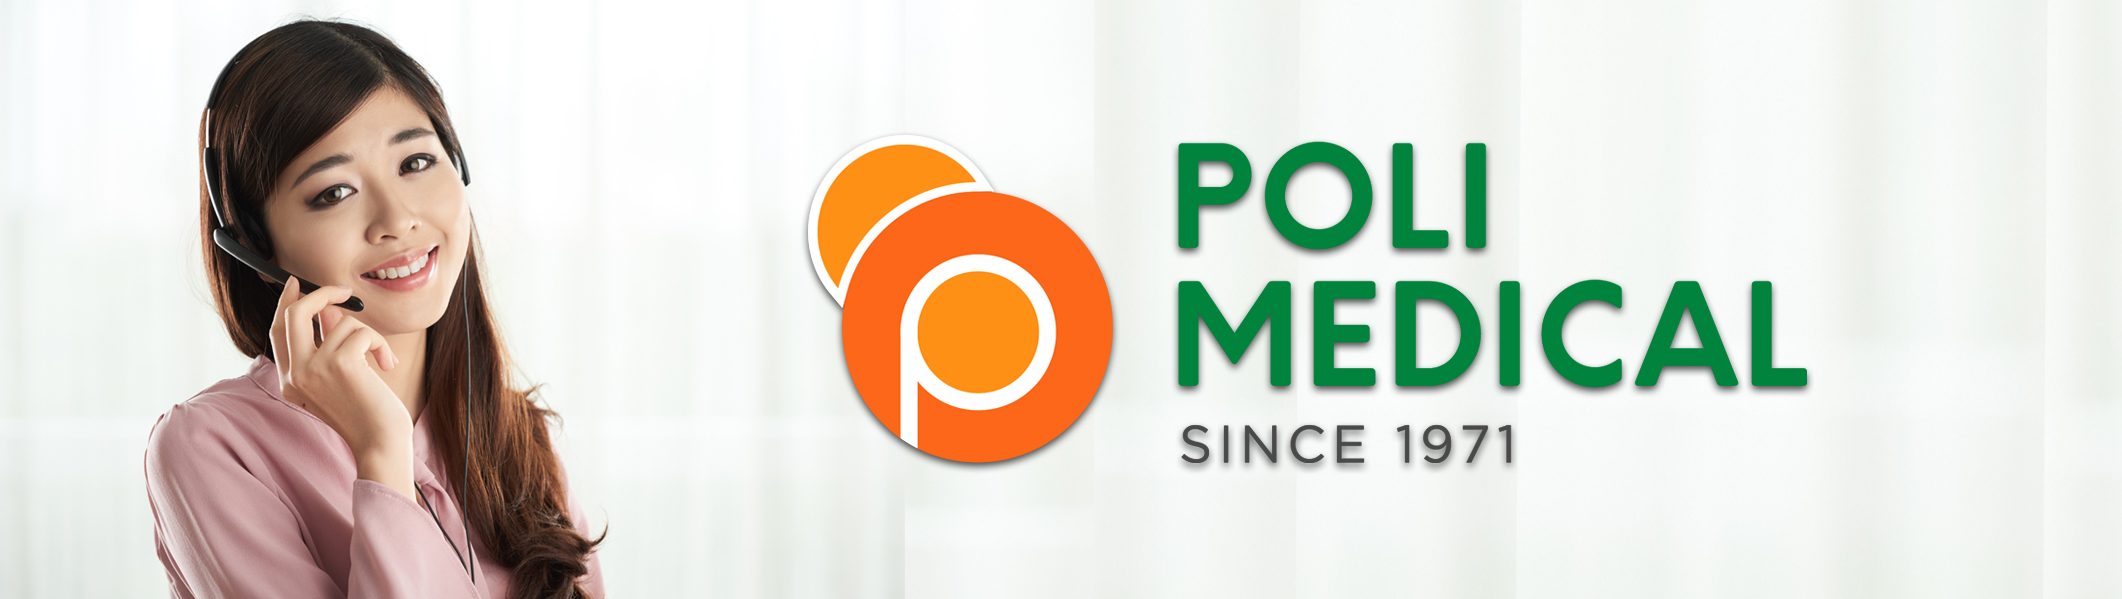 Poli Medical Contact Us